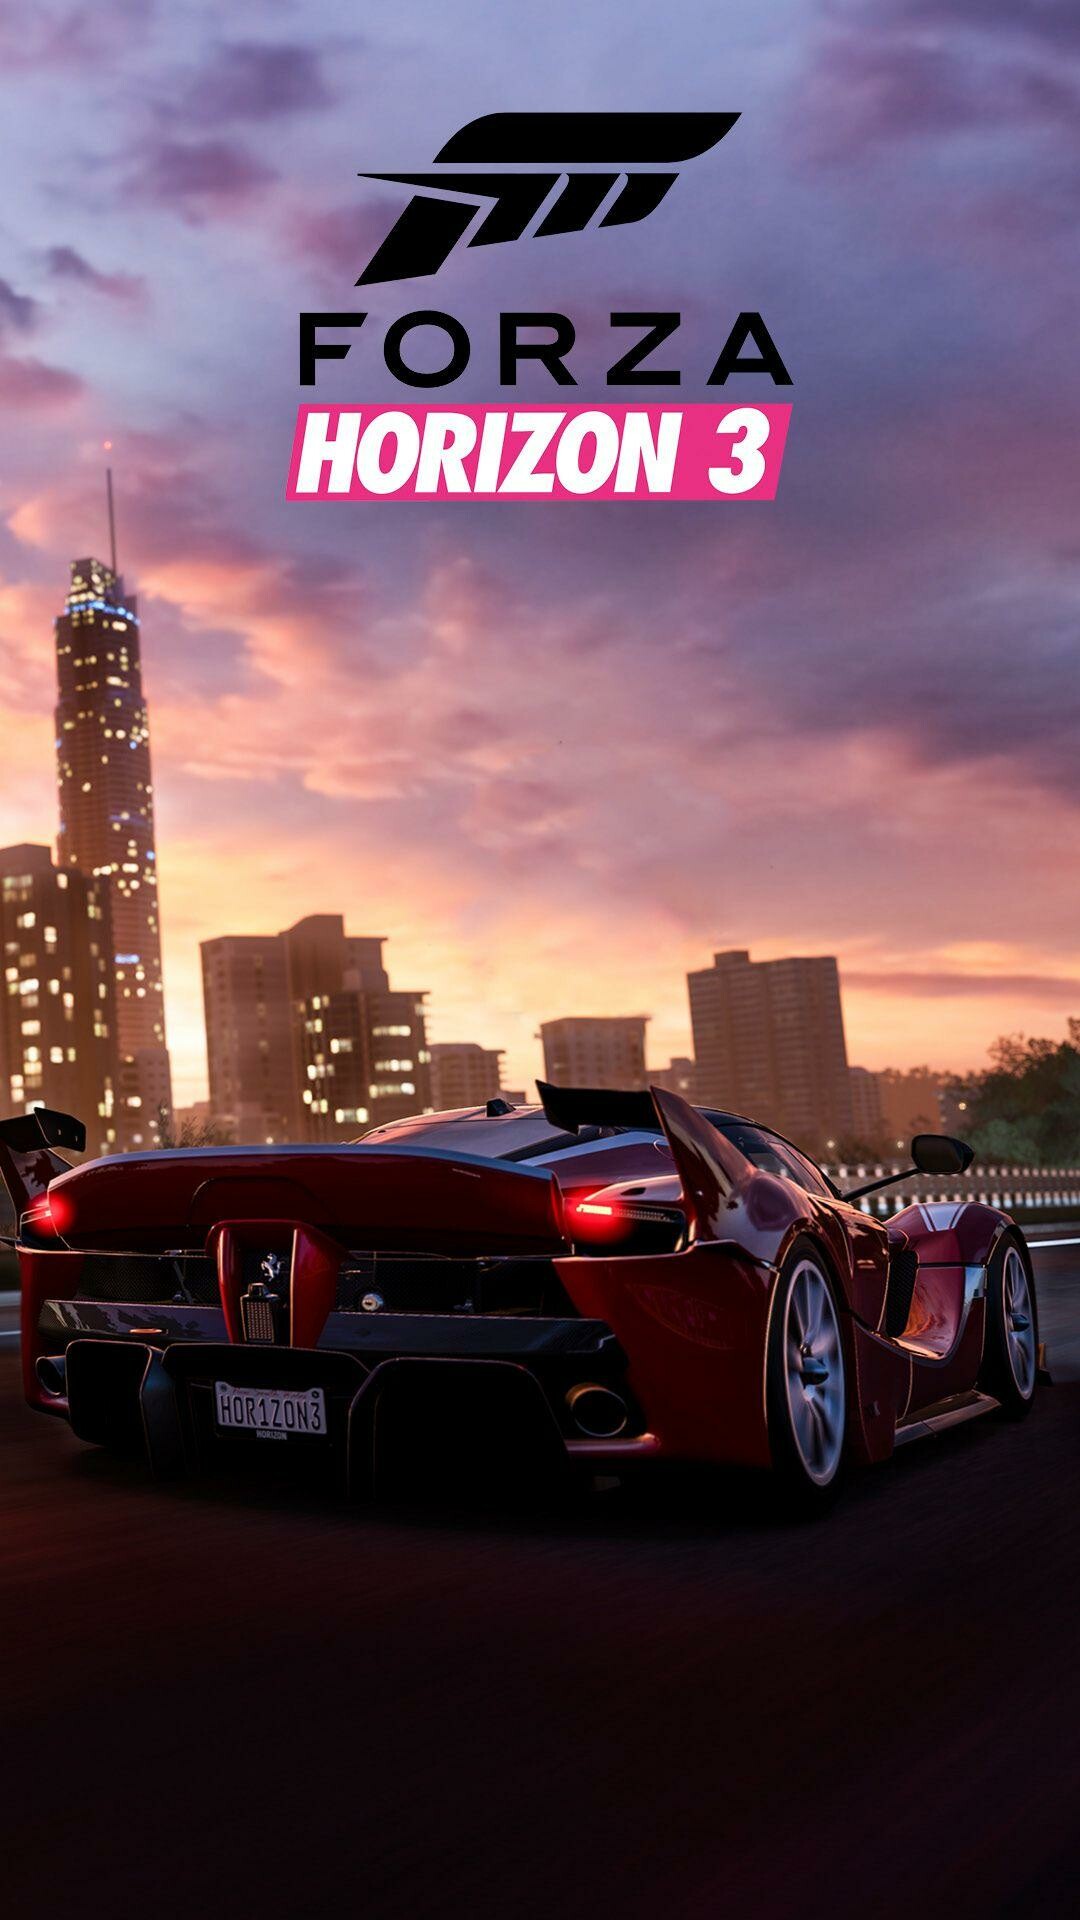 Forza Horizon: FH3, The third installment, The open-world racing series. 1080x1920 Full HD Wallpaper.